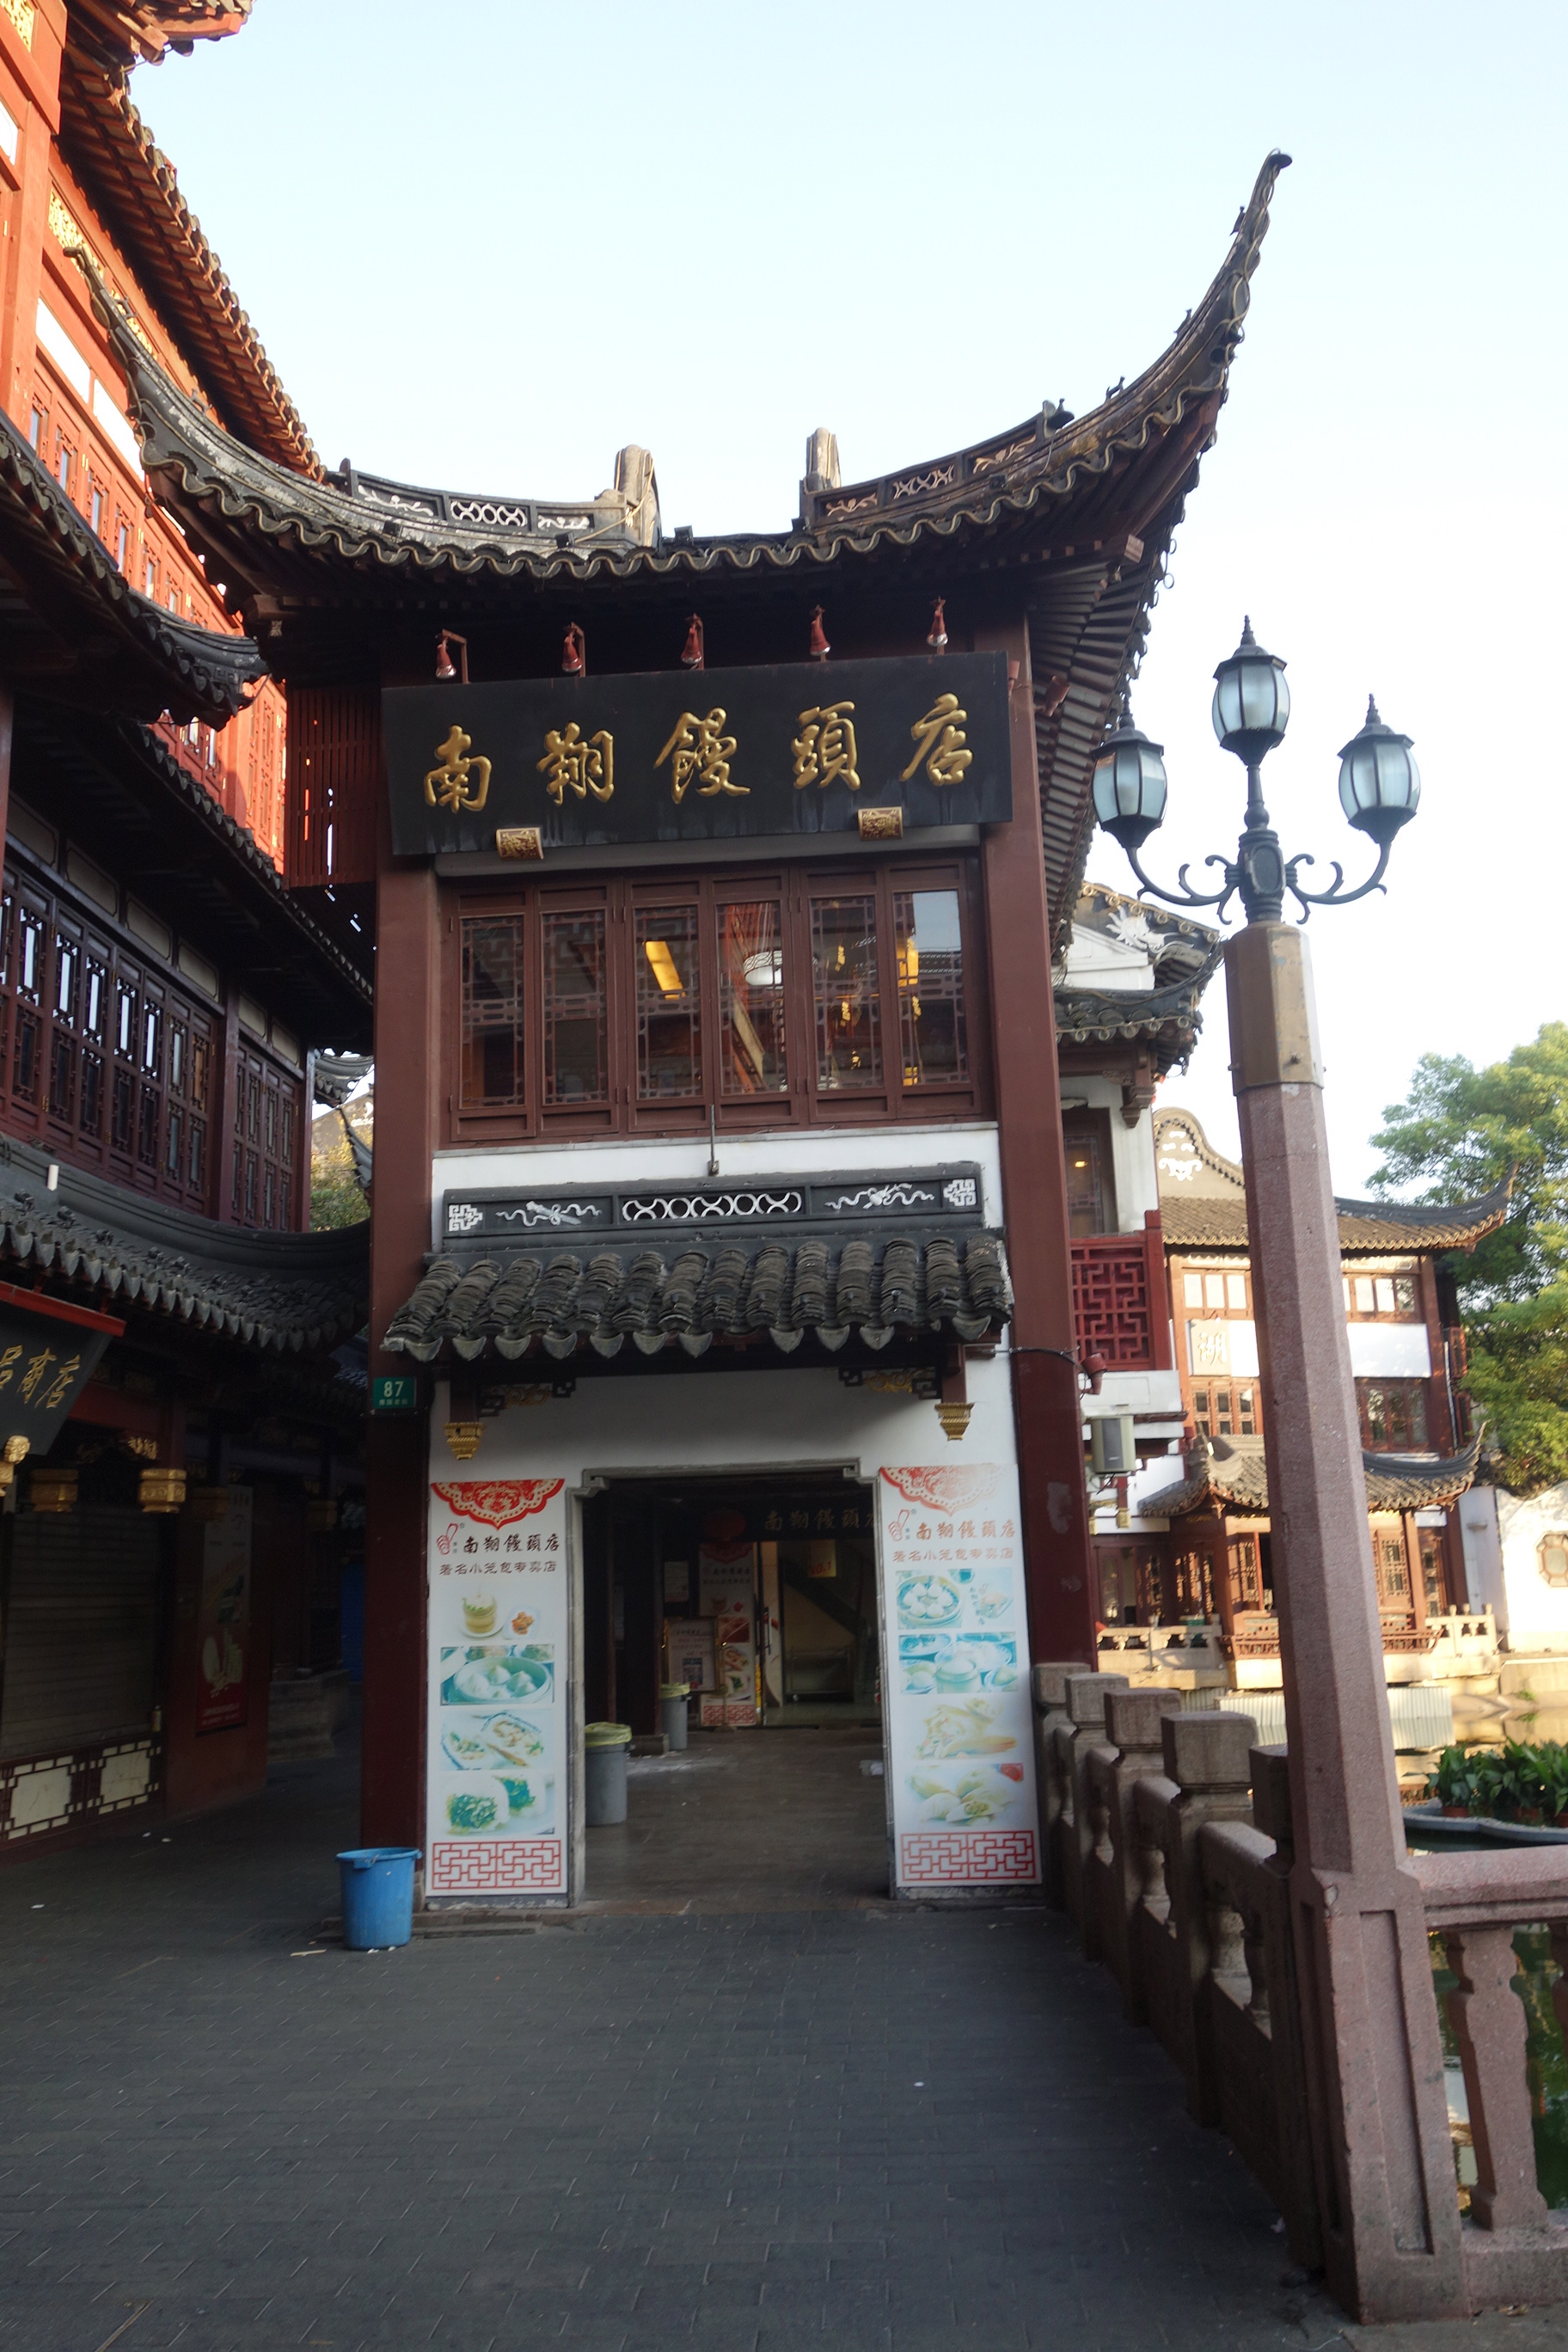 Nanxiang Mantou Dian in the Yu Garden complex. It's a fun place to walk around.